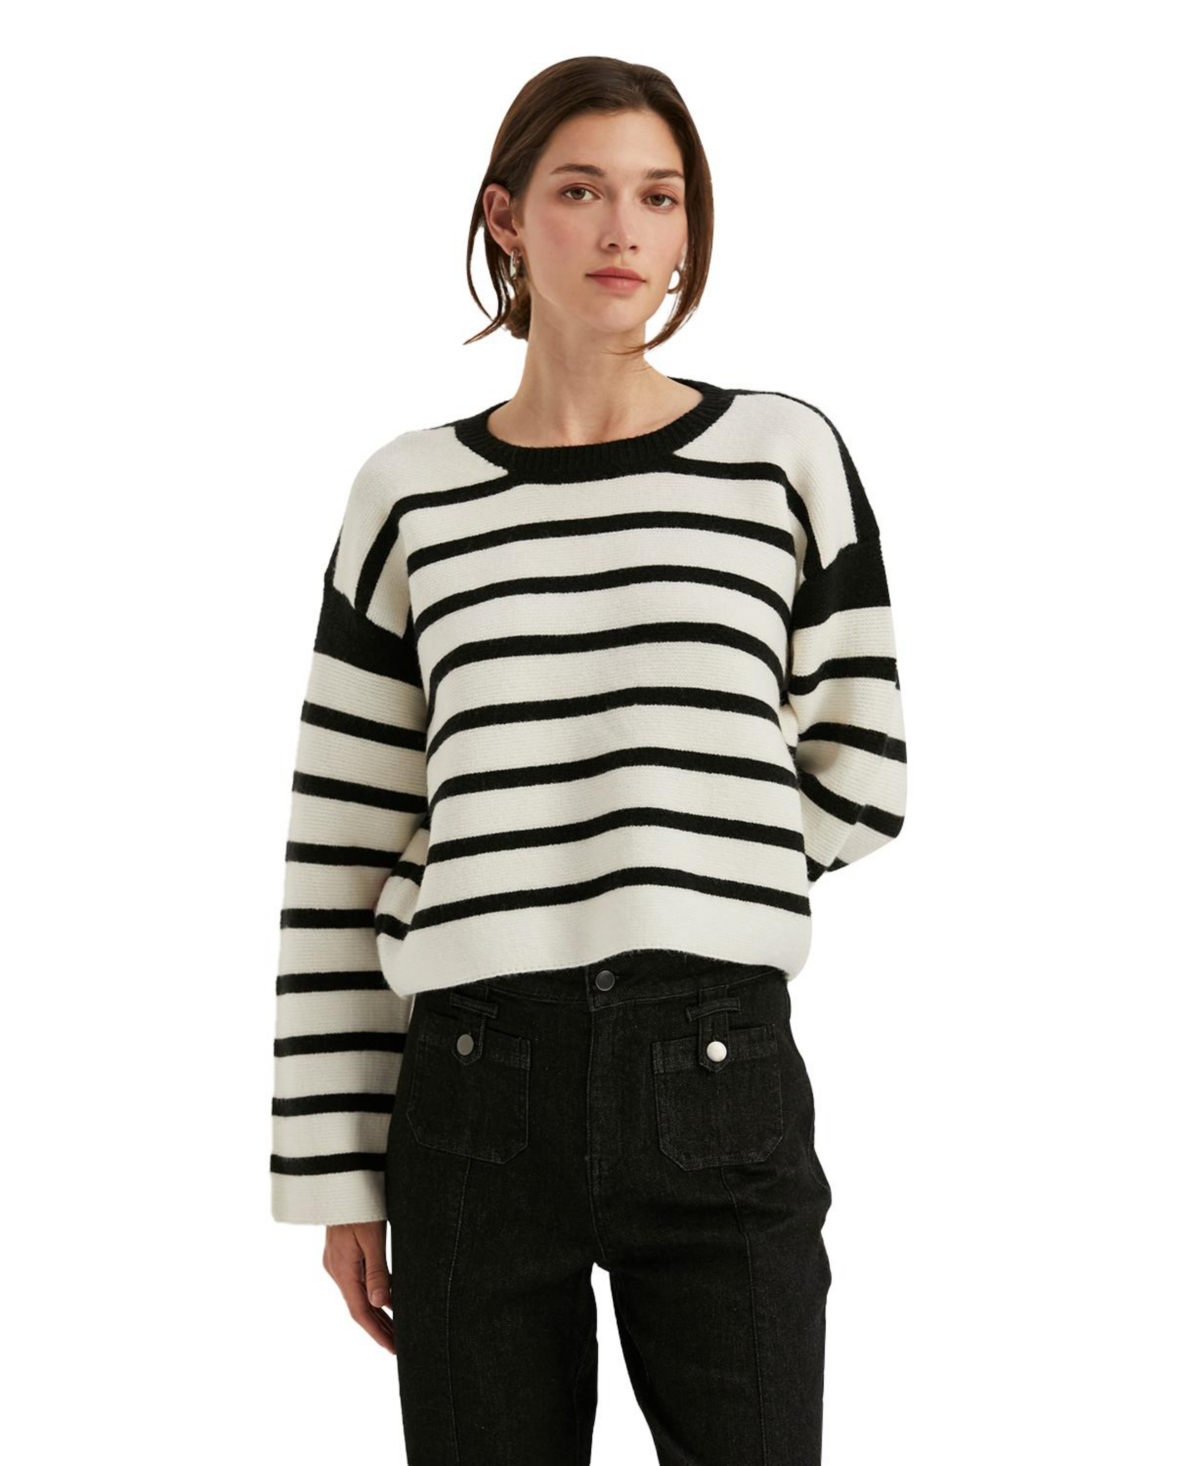 Women's Olivia Stripe Sweater - Open white + white/black